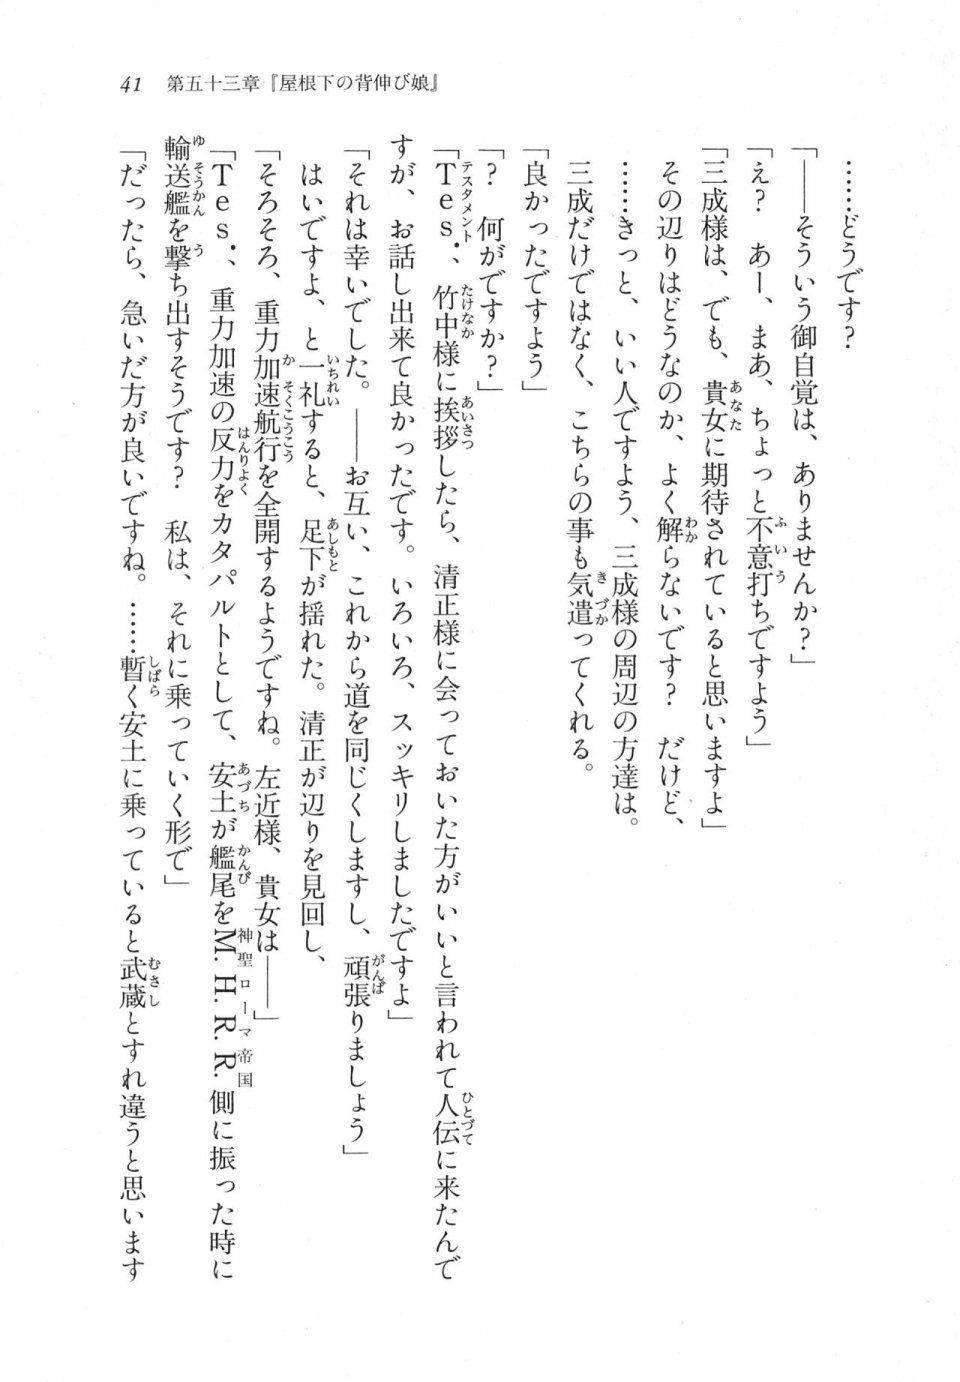 Kyoukai Senjou no Horizon LN Vol 18(7C) Part 1 - Photo #41